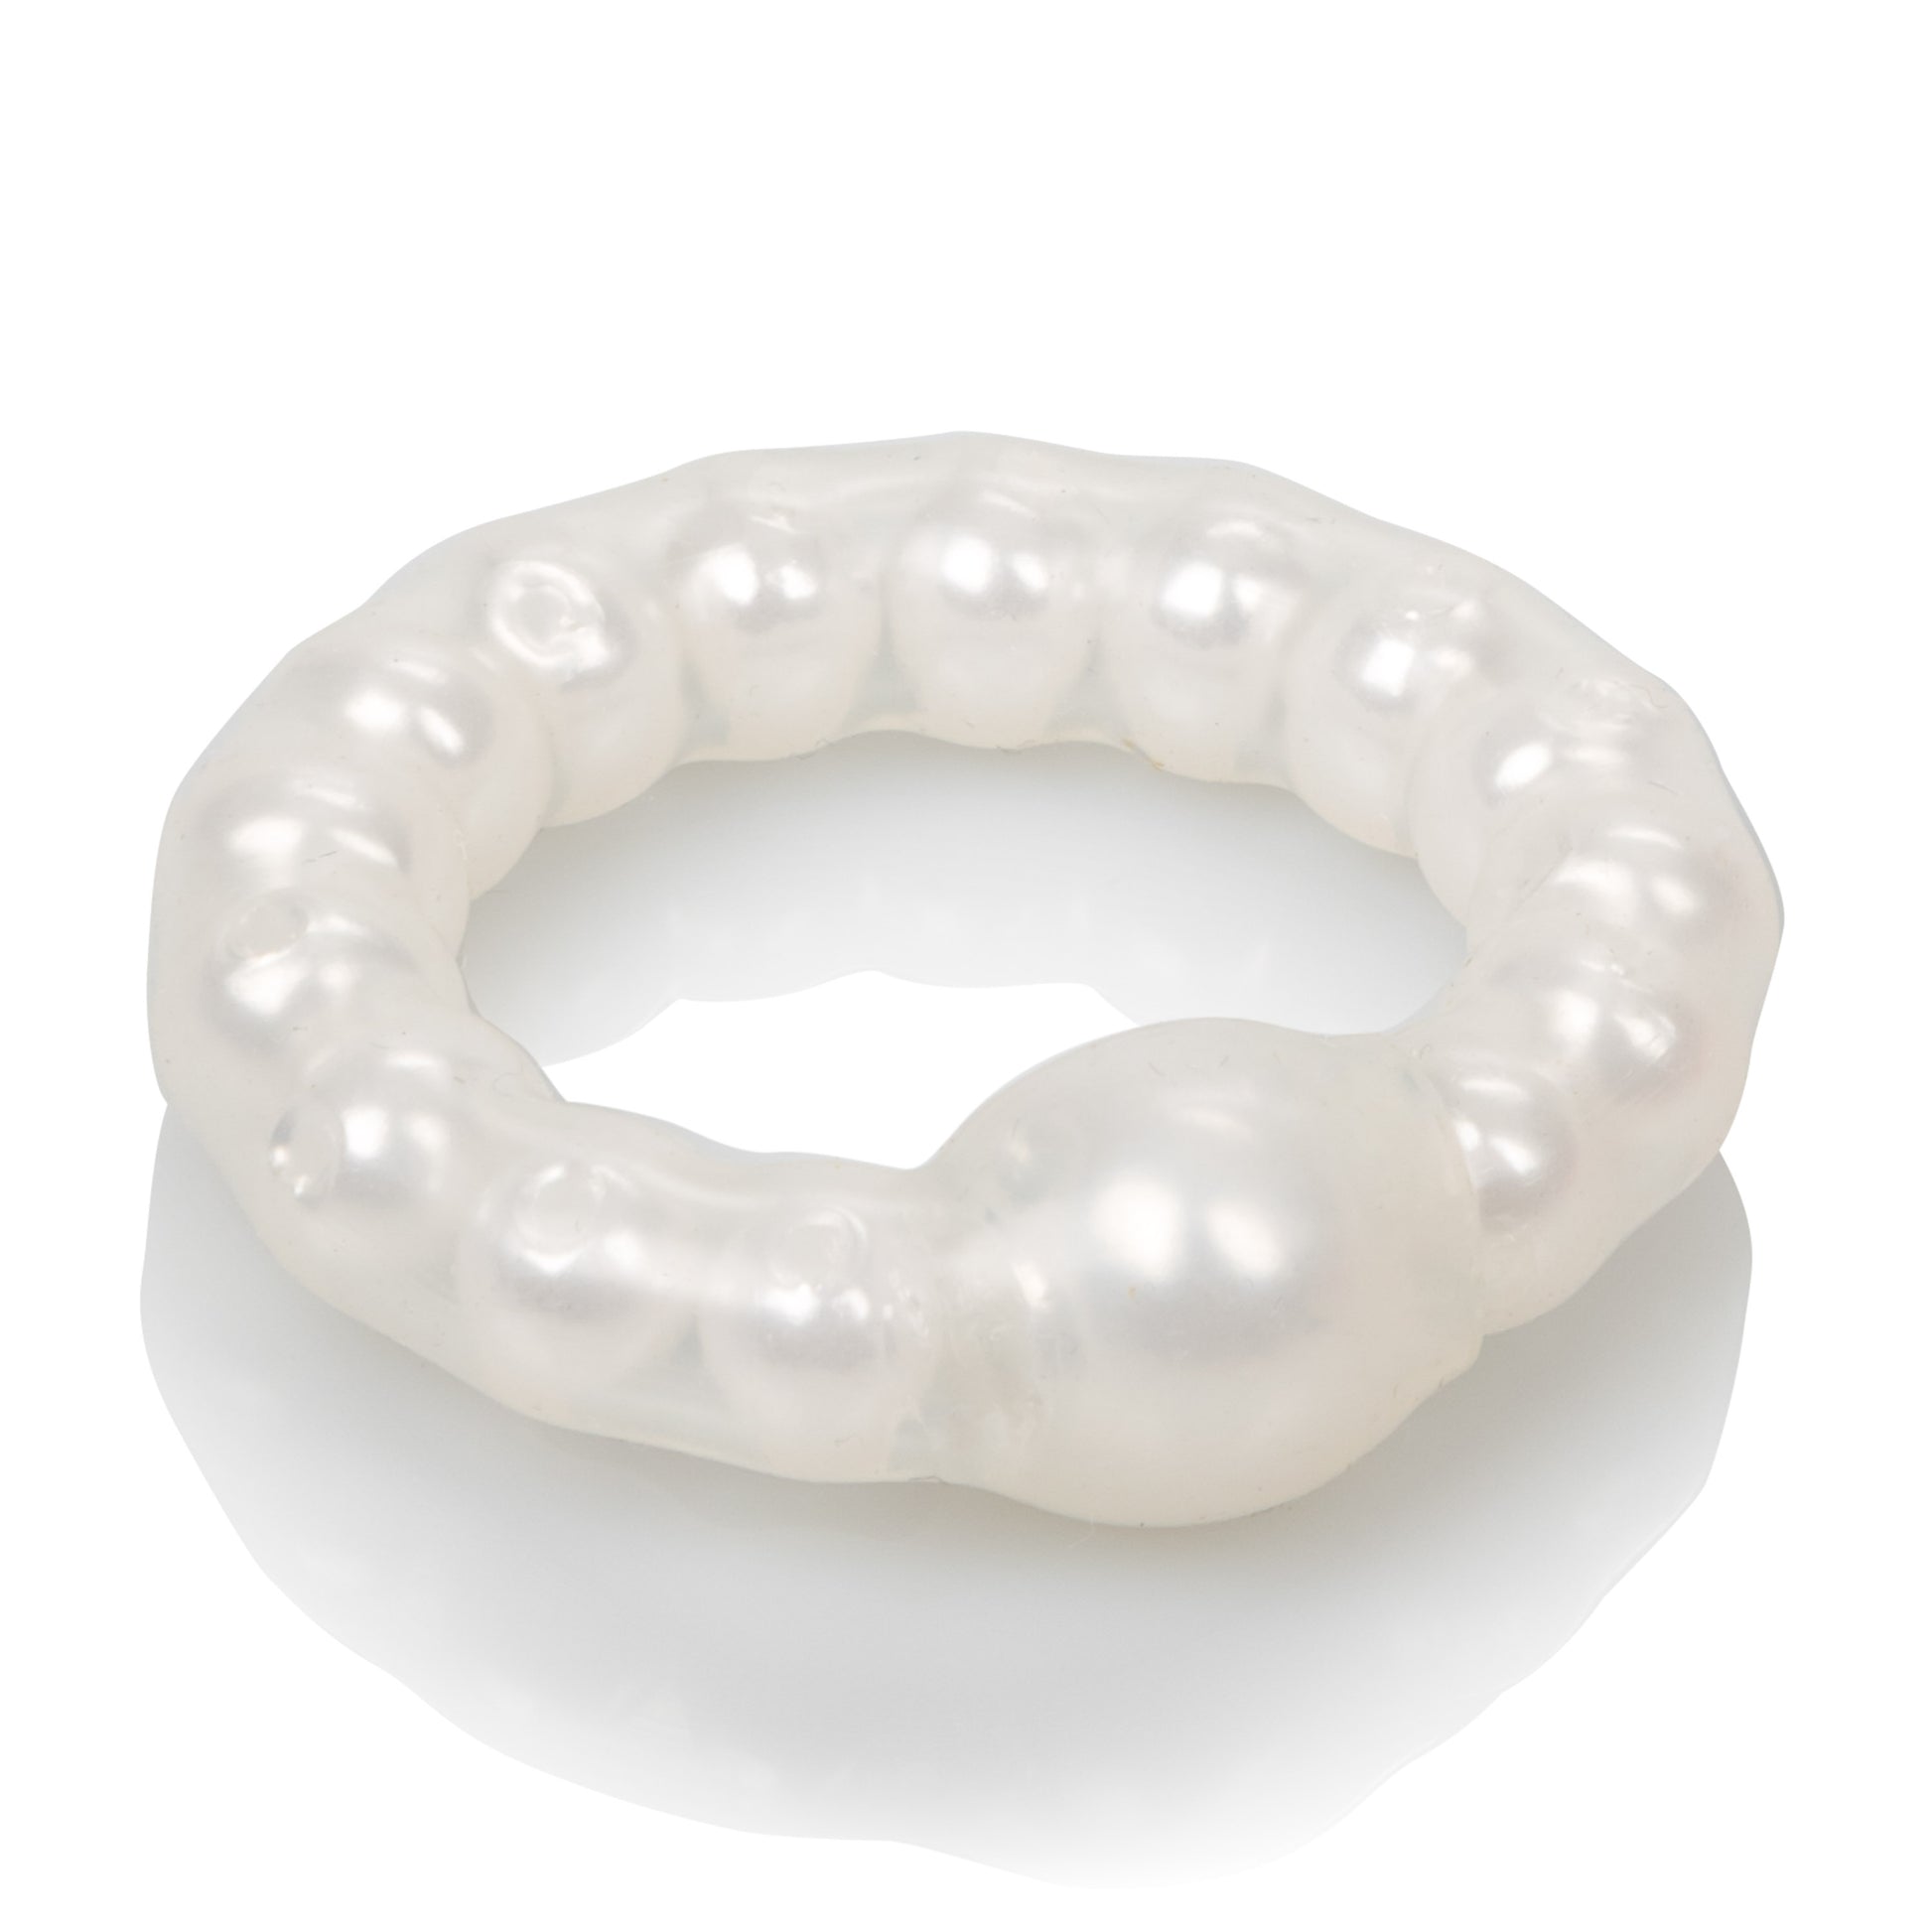 Pearl Beaded Prolong Rings - White SE1425222